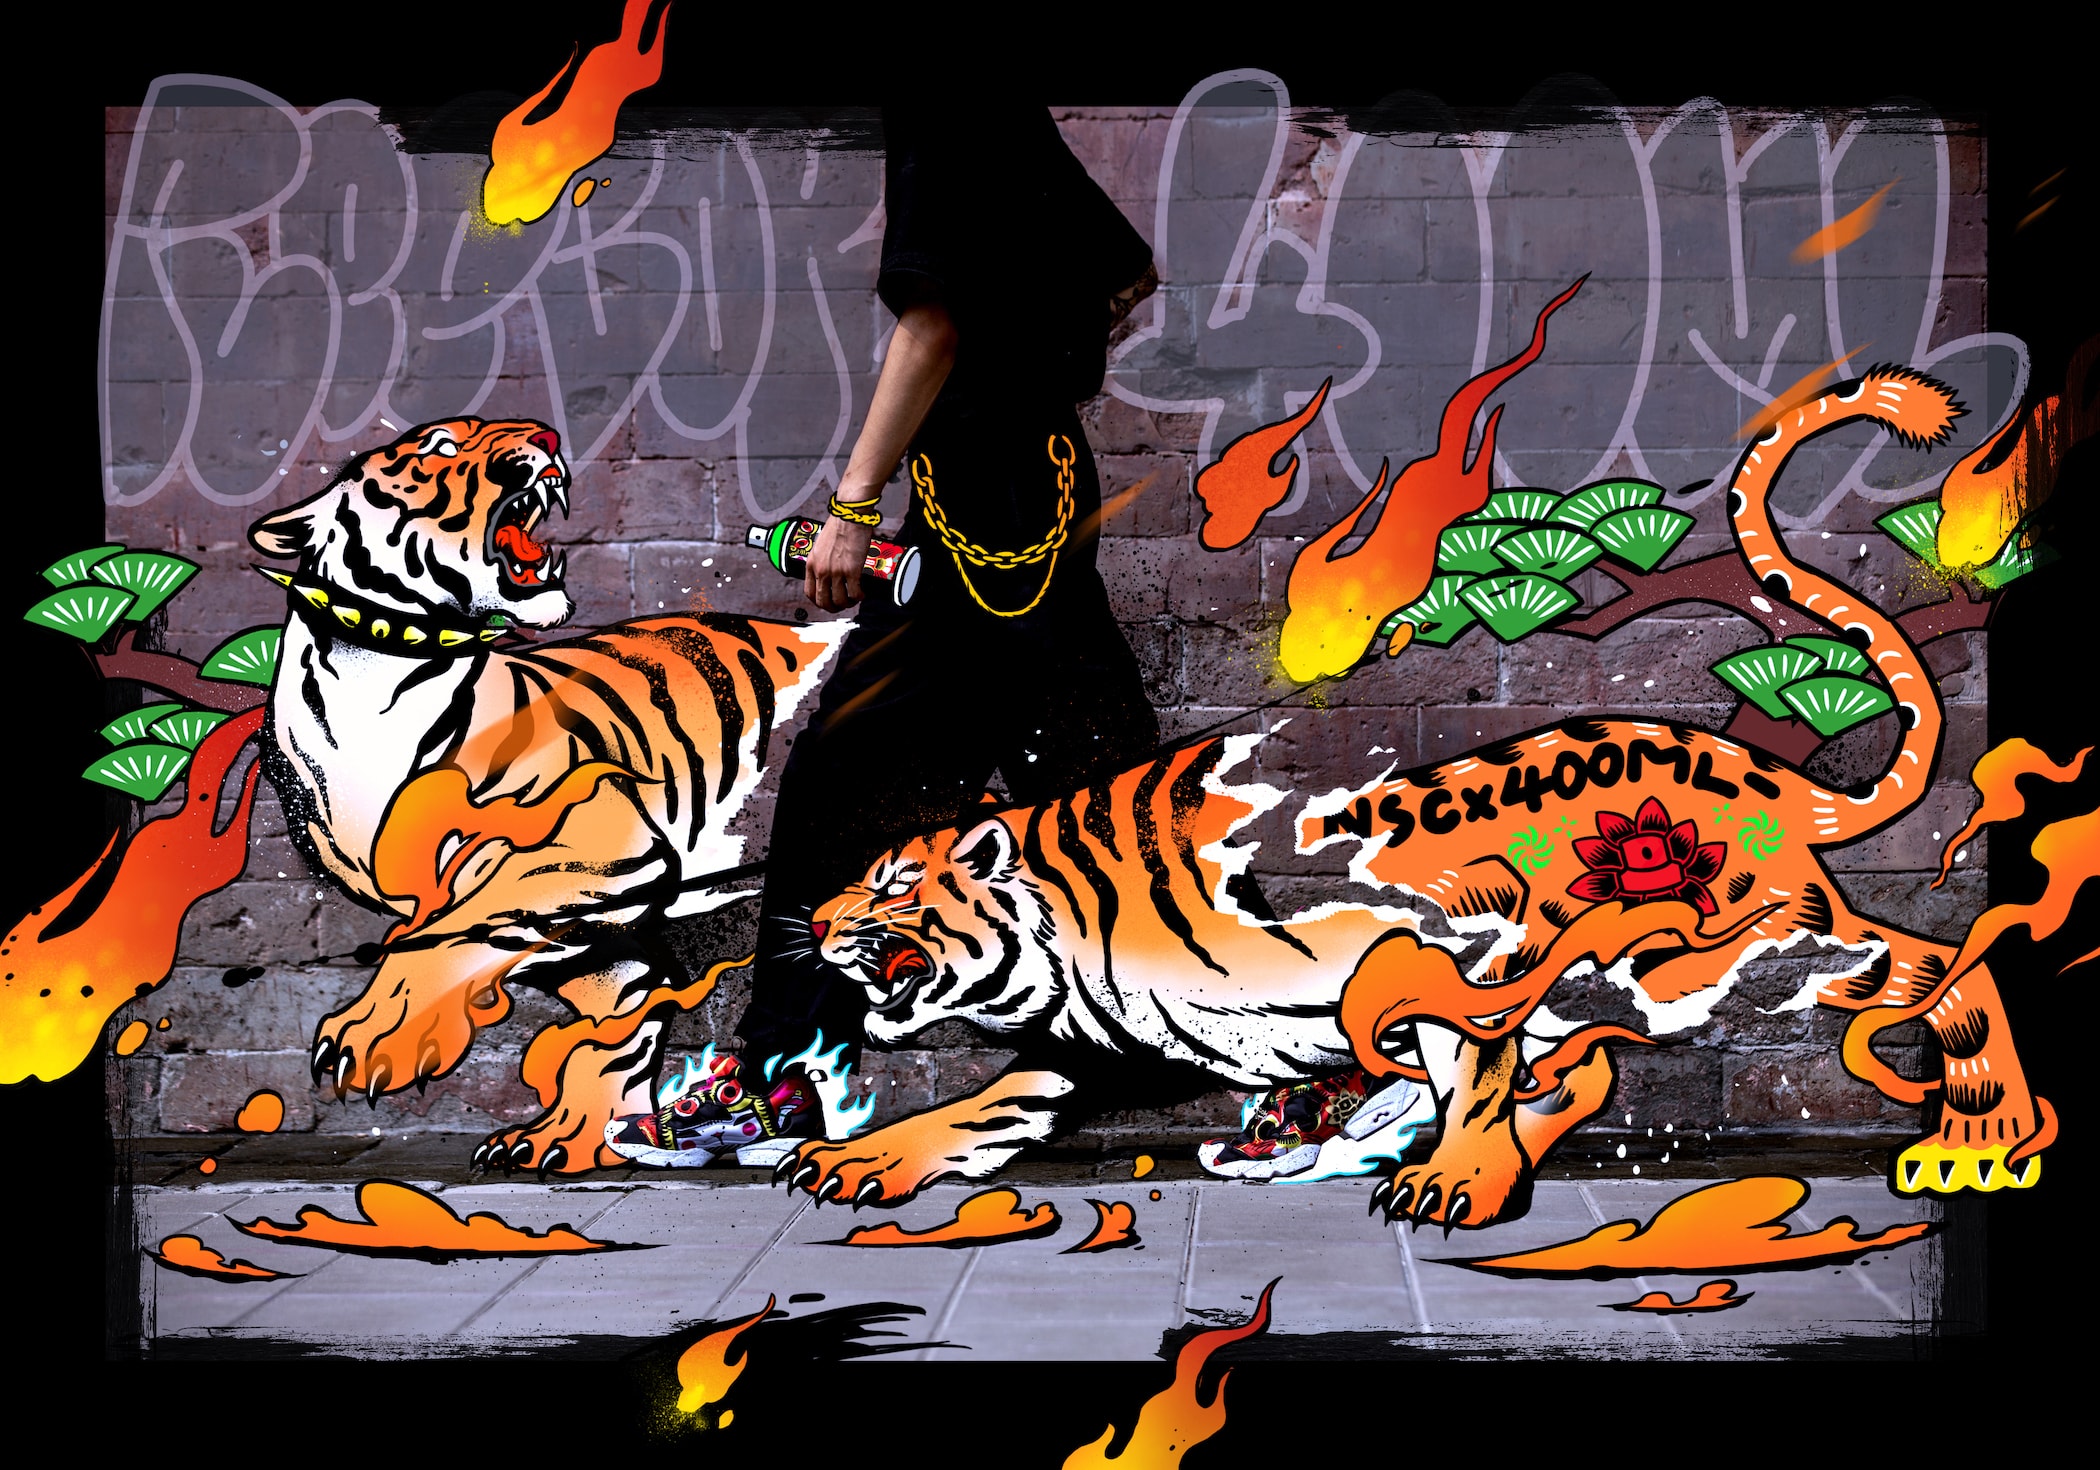 400ml x Reebok 全新聯名鞋款 Instapump Fury「Rebels Paper Tiger」藝術特輯